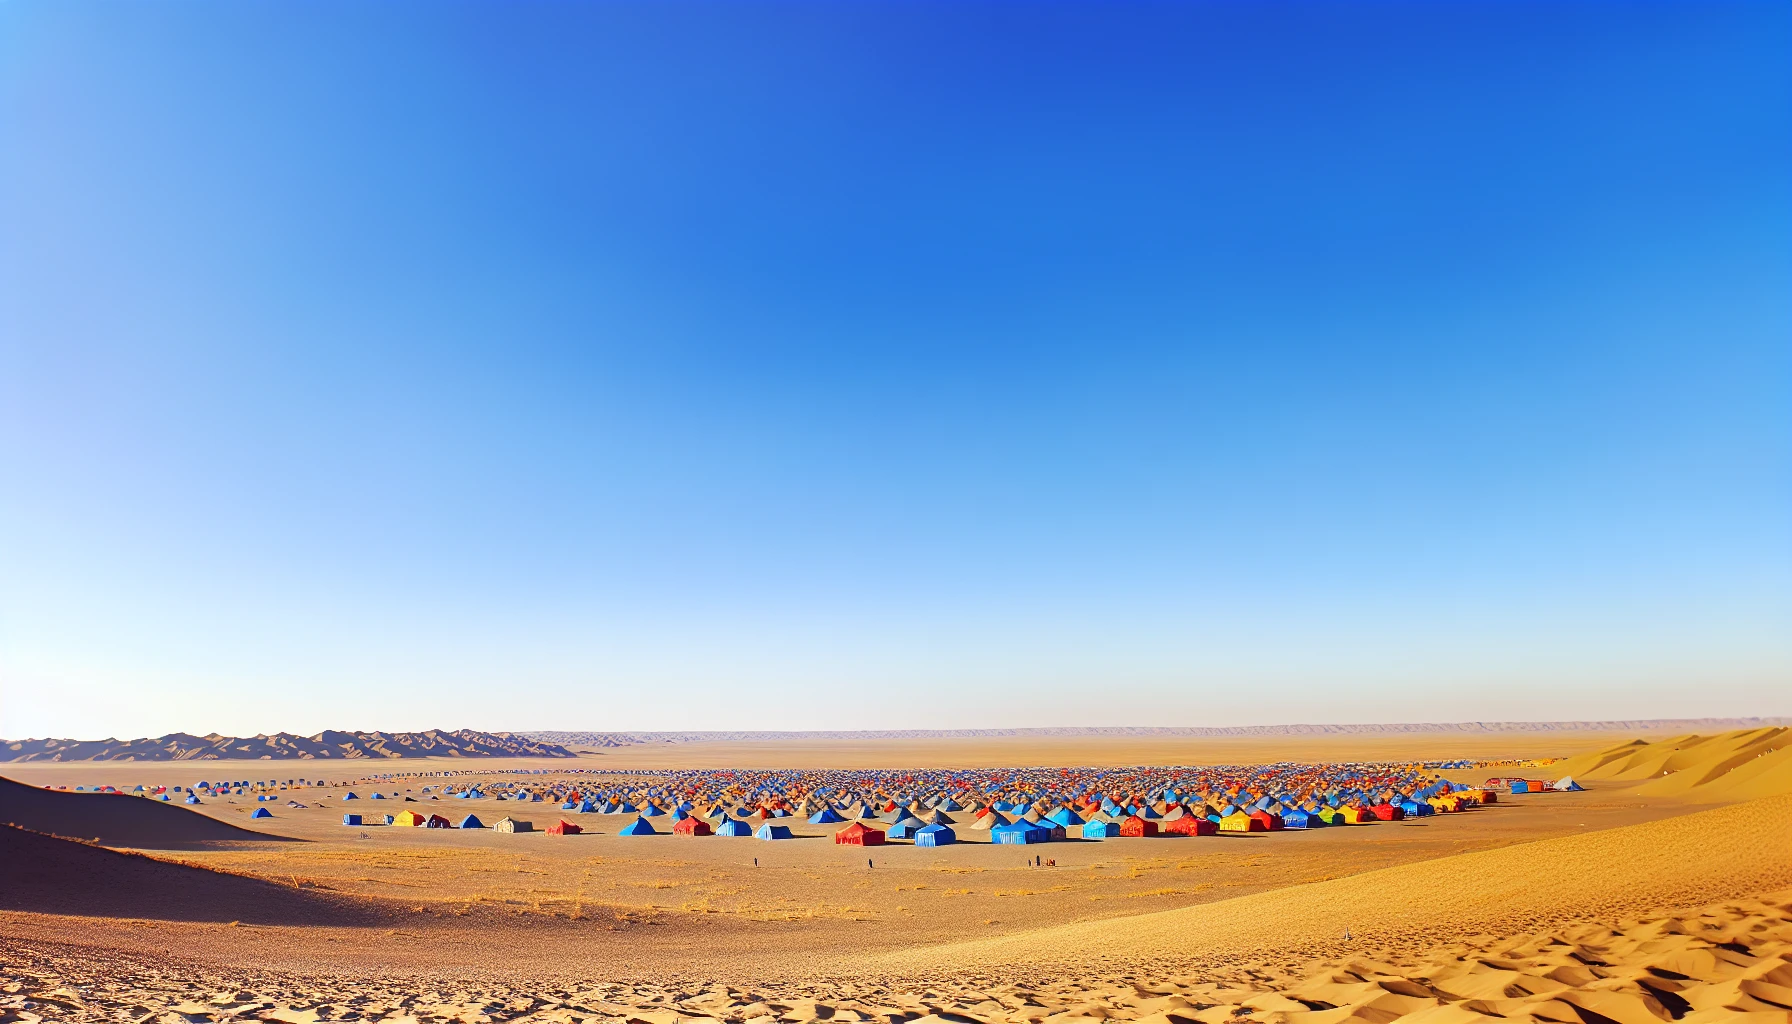 Tents in the Gobi Desert during mid-October